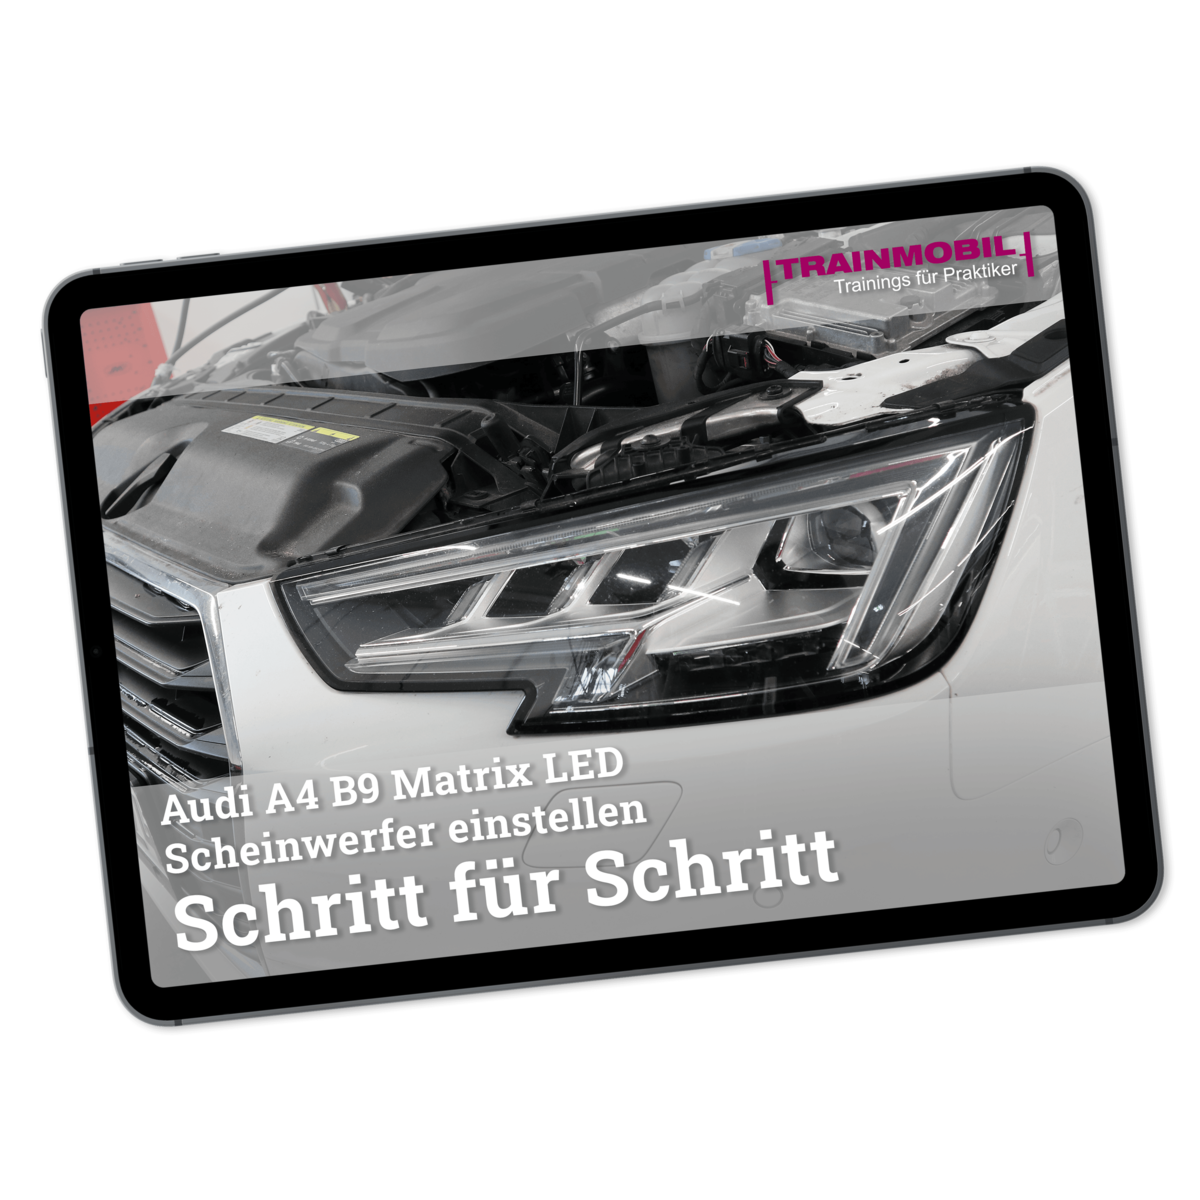 Audi A B Led Scheinwerfer Ubicaciondepersonas Cdmx Gob Mx Free